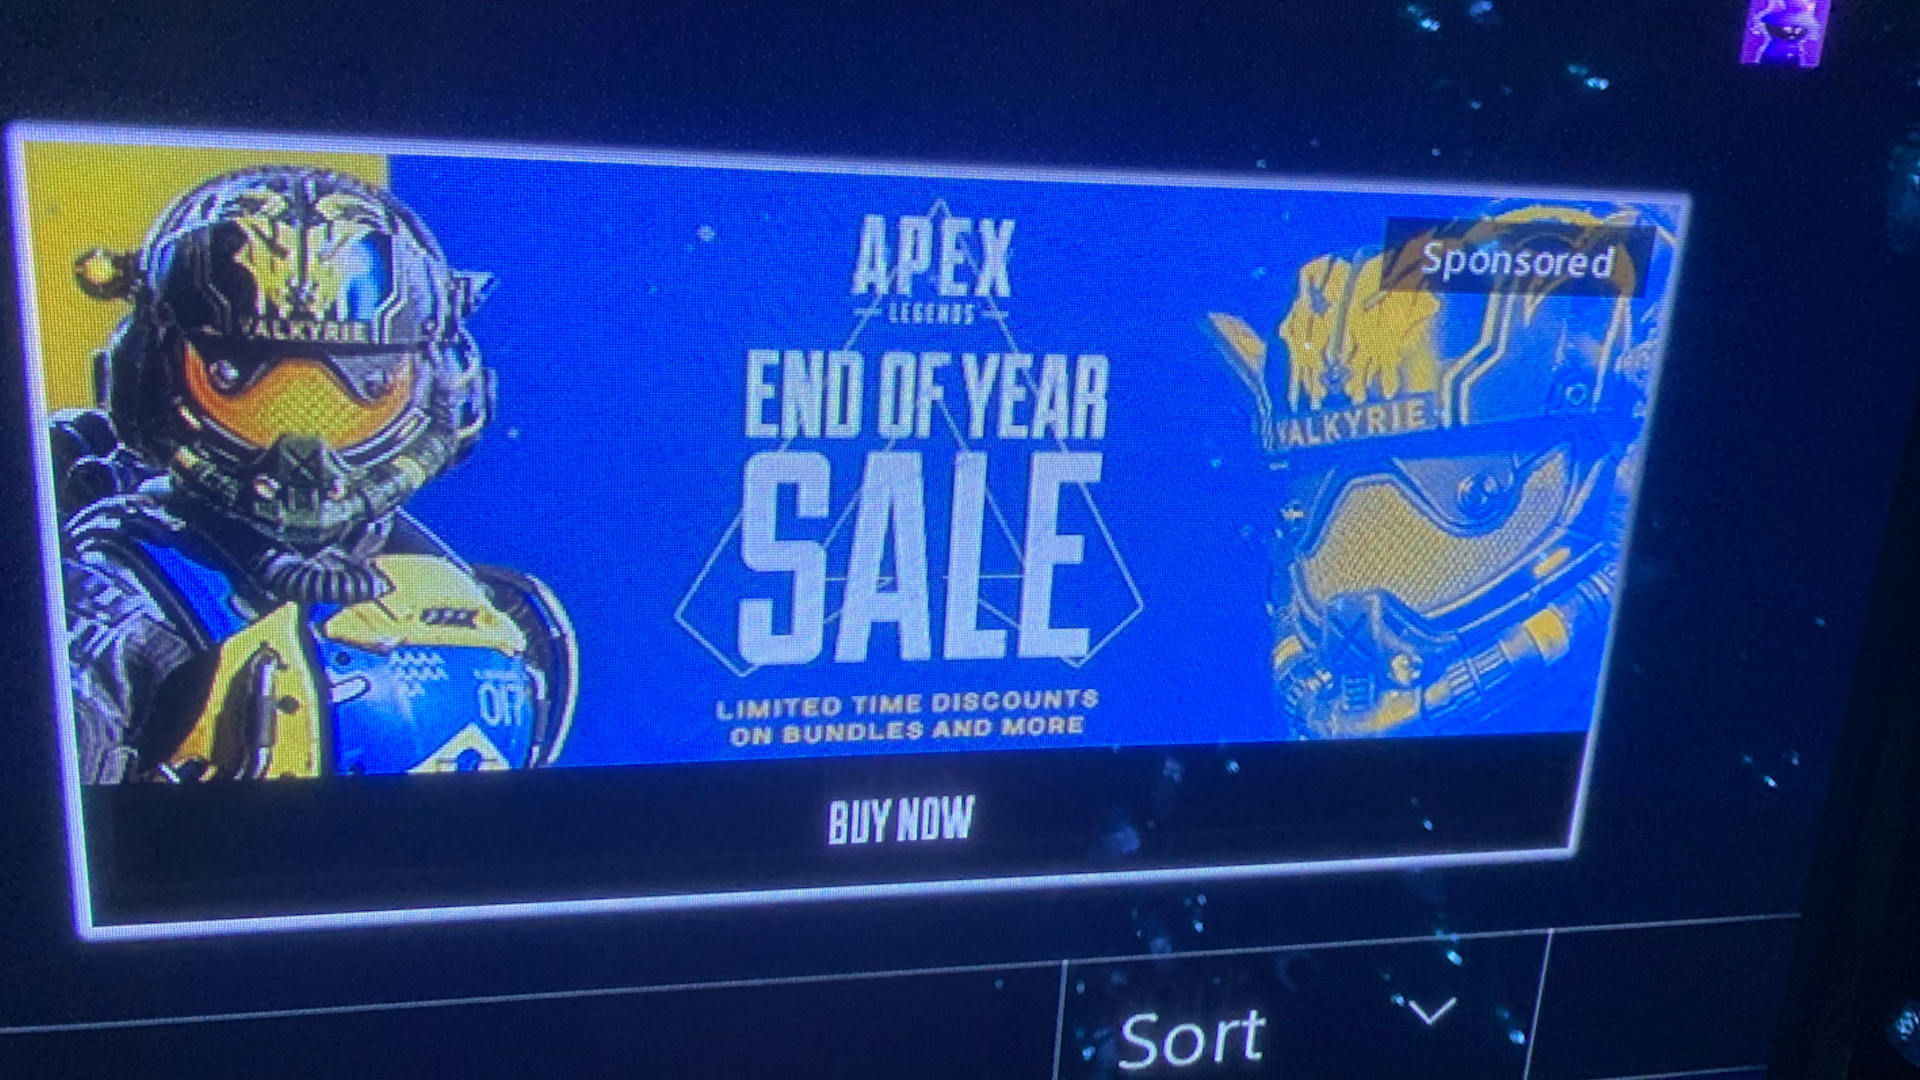 【APEX】PlayStationが年末ストアイベント「END OF YEAR」の告知画像を先出ししてしまった模様